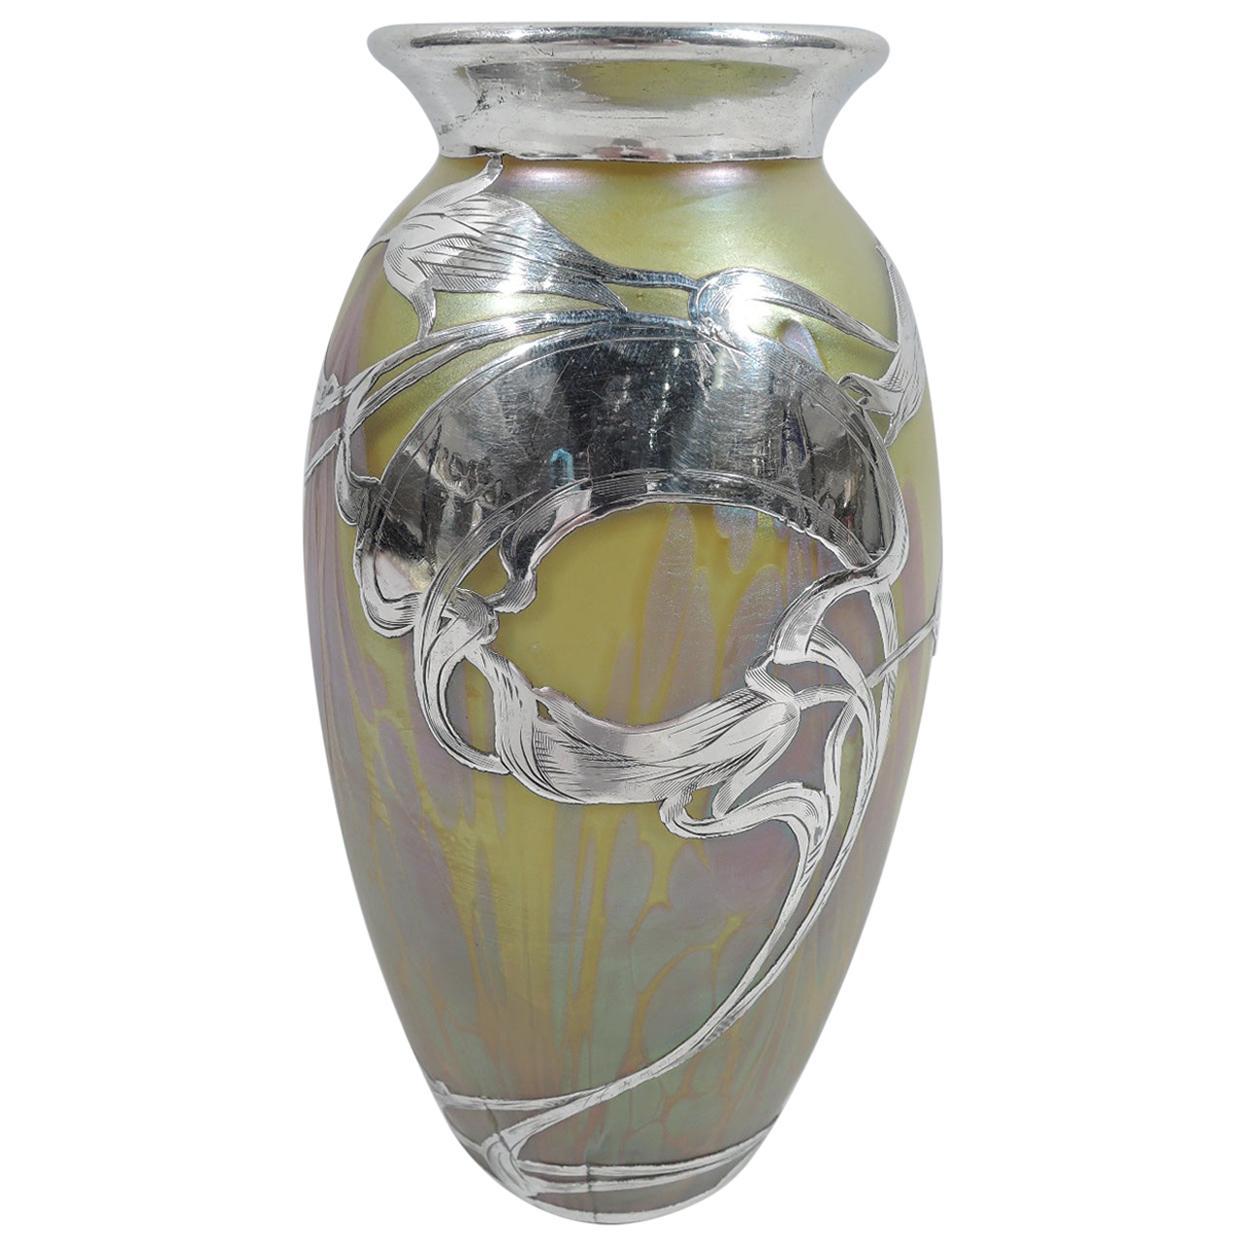 Beautiful Art Nouveau Loetz Medici Vase with Whiplash Silver Overlay